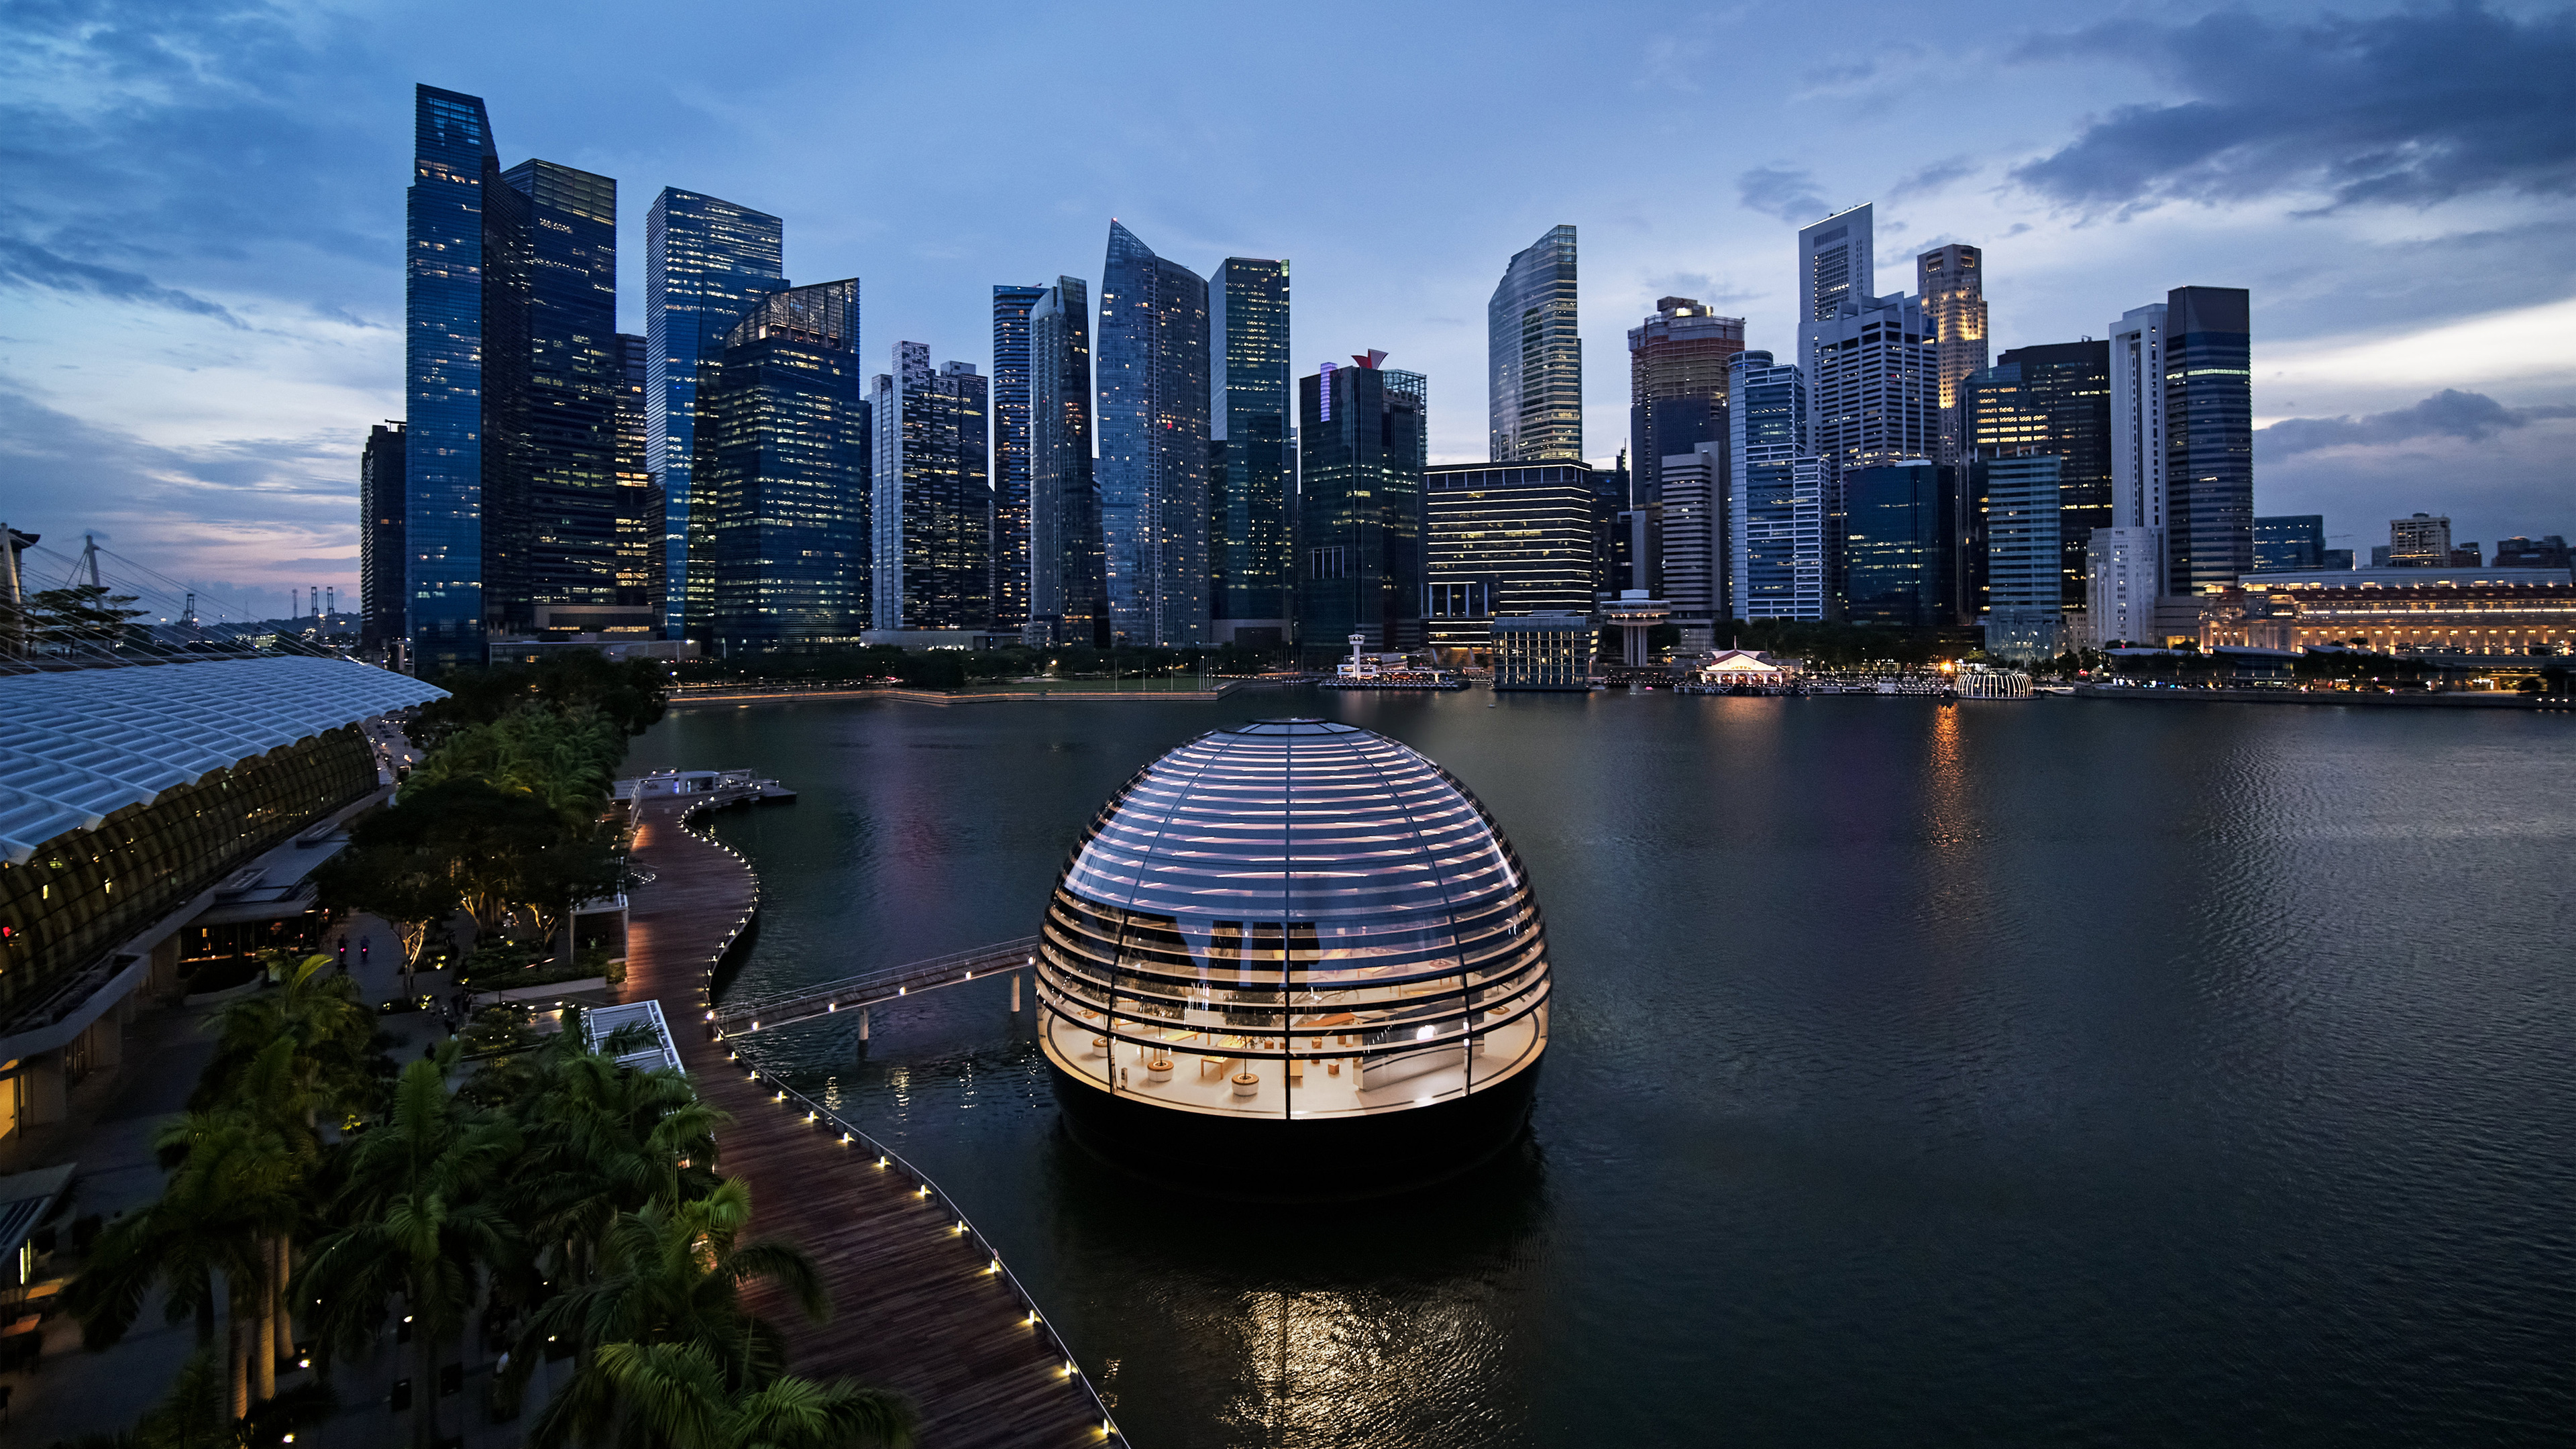  iOSMac Apple Marina Bay Sands ilumina Singapur  